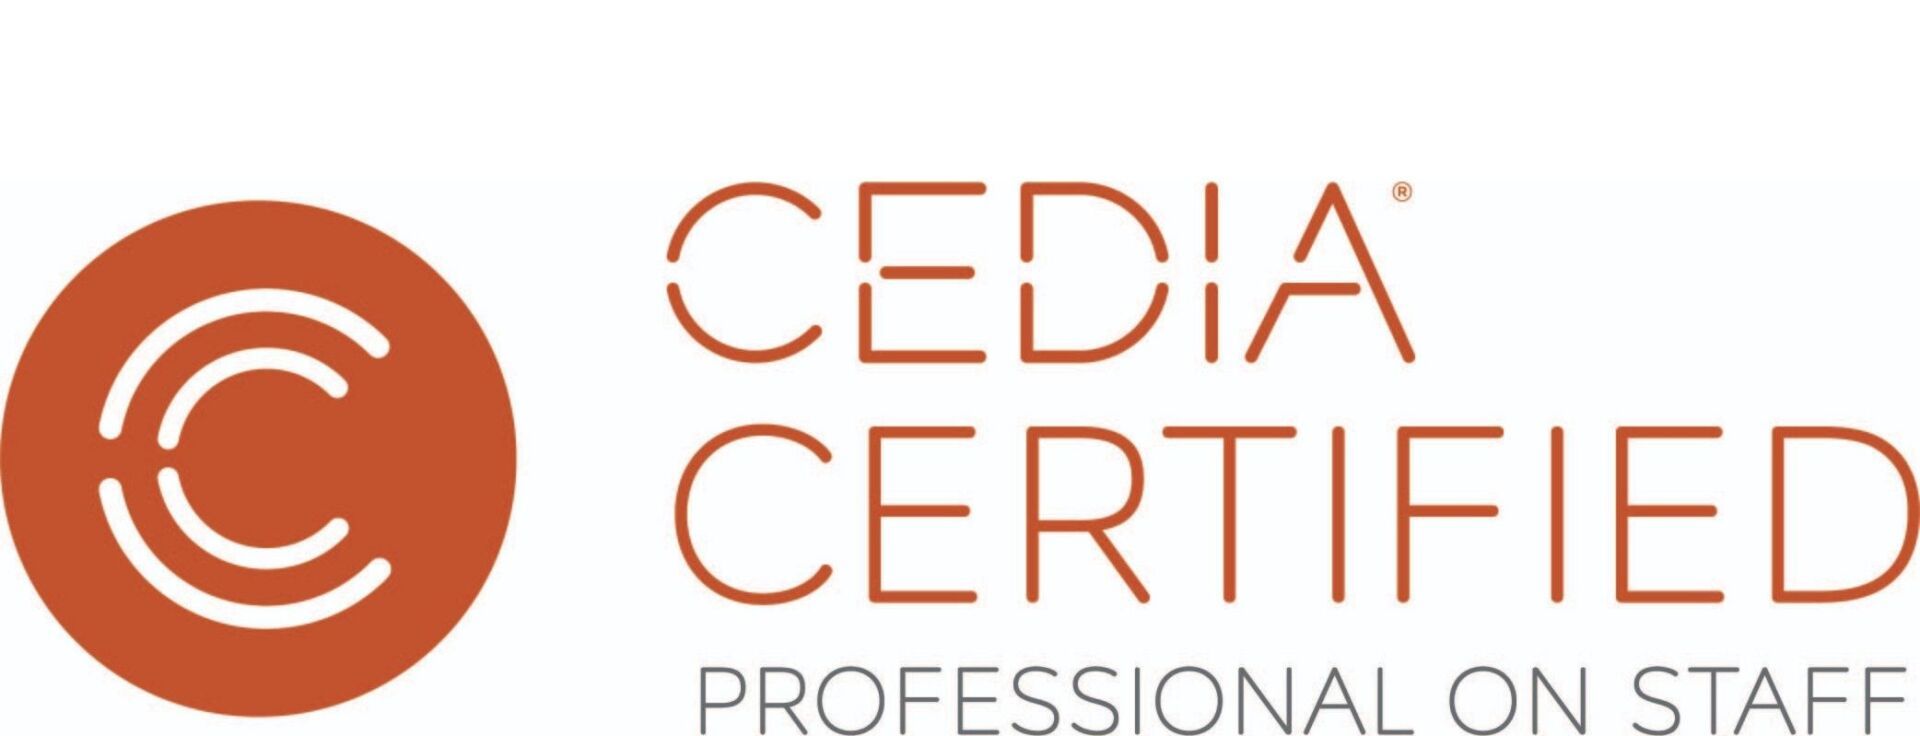 Cedia certified professional on staff